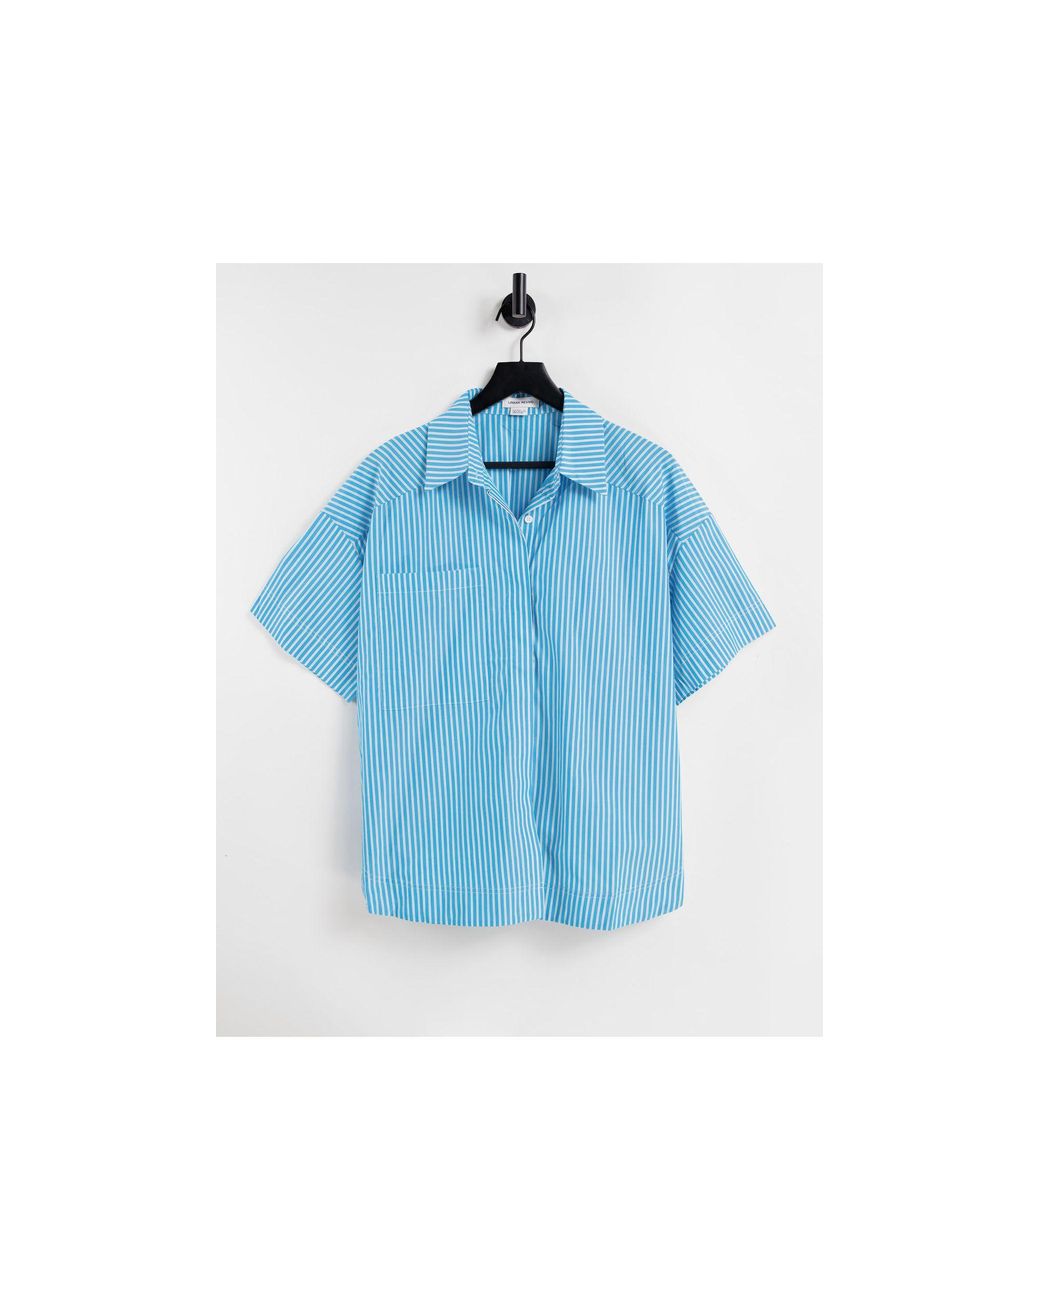 Urban Revivo Oversized Stripe Shirt in Blue | Lyst Canada